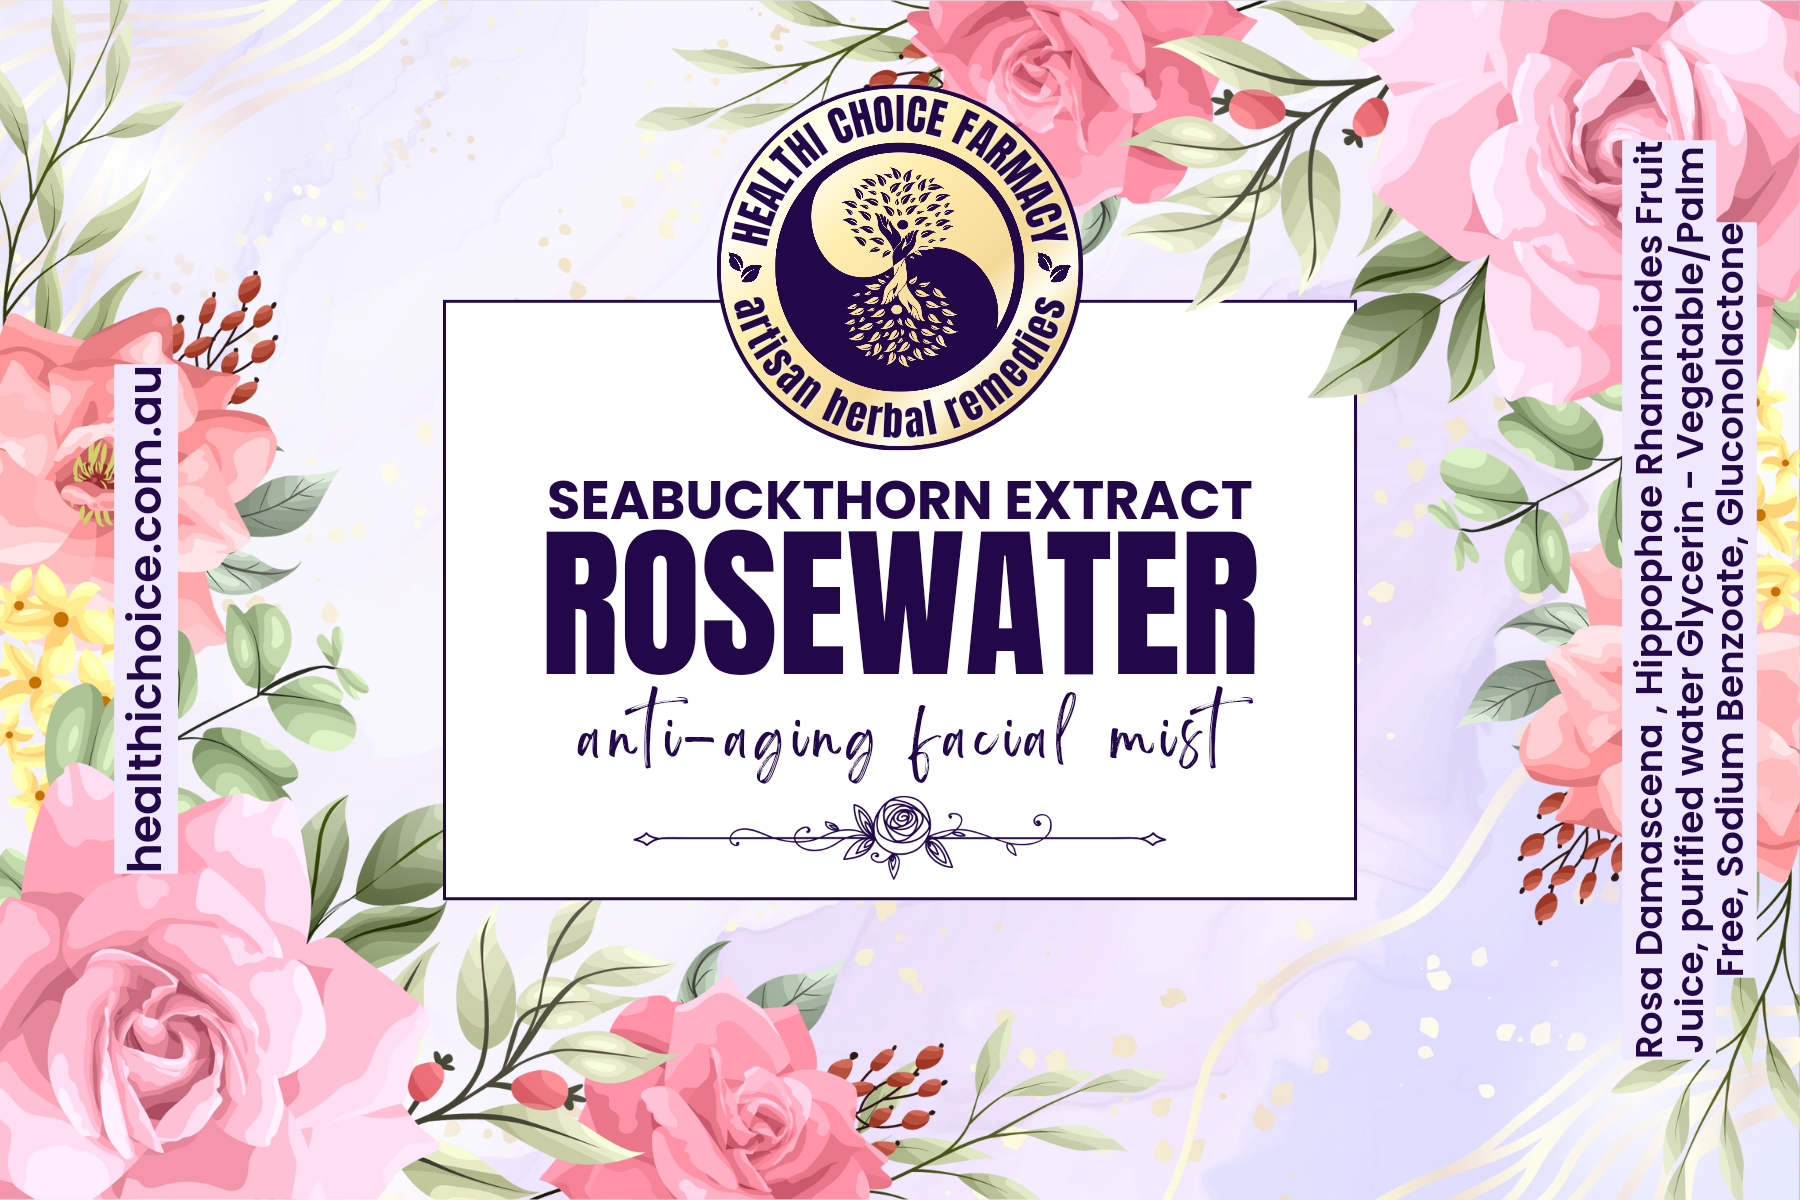 ROSEWATER & SEABUCKTHORN extract | Anti-aging Facial Mist - Healthi Choice Farmacy 